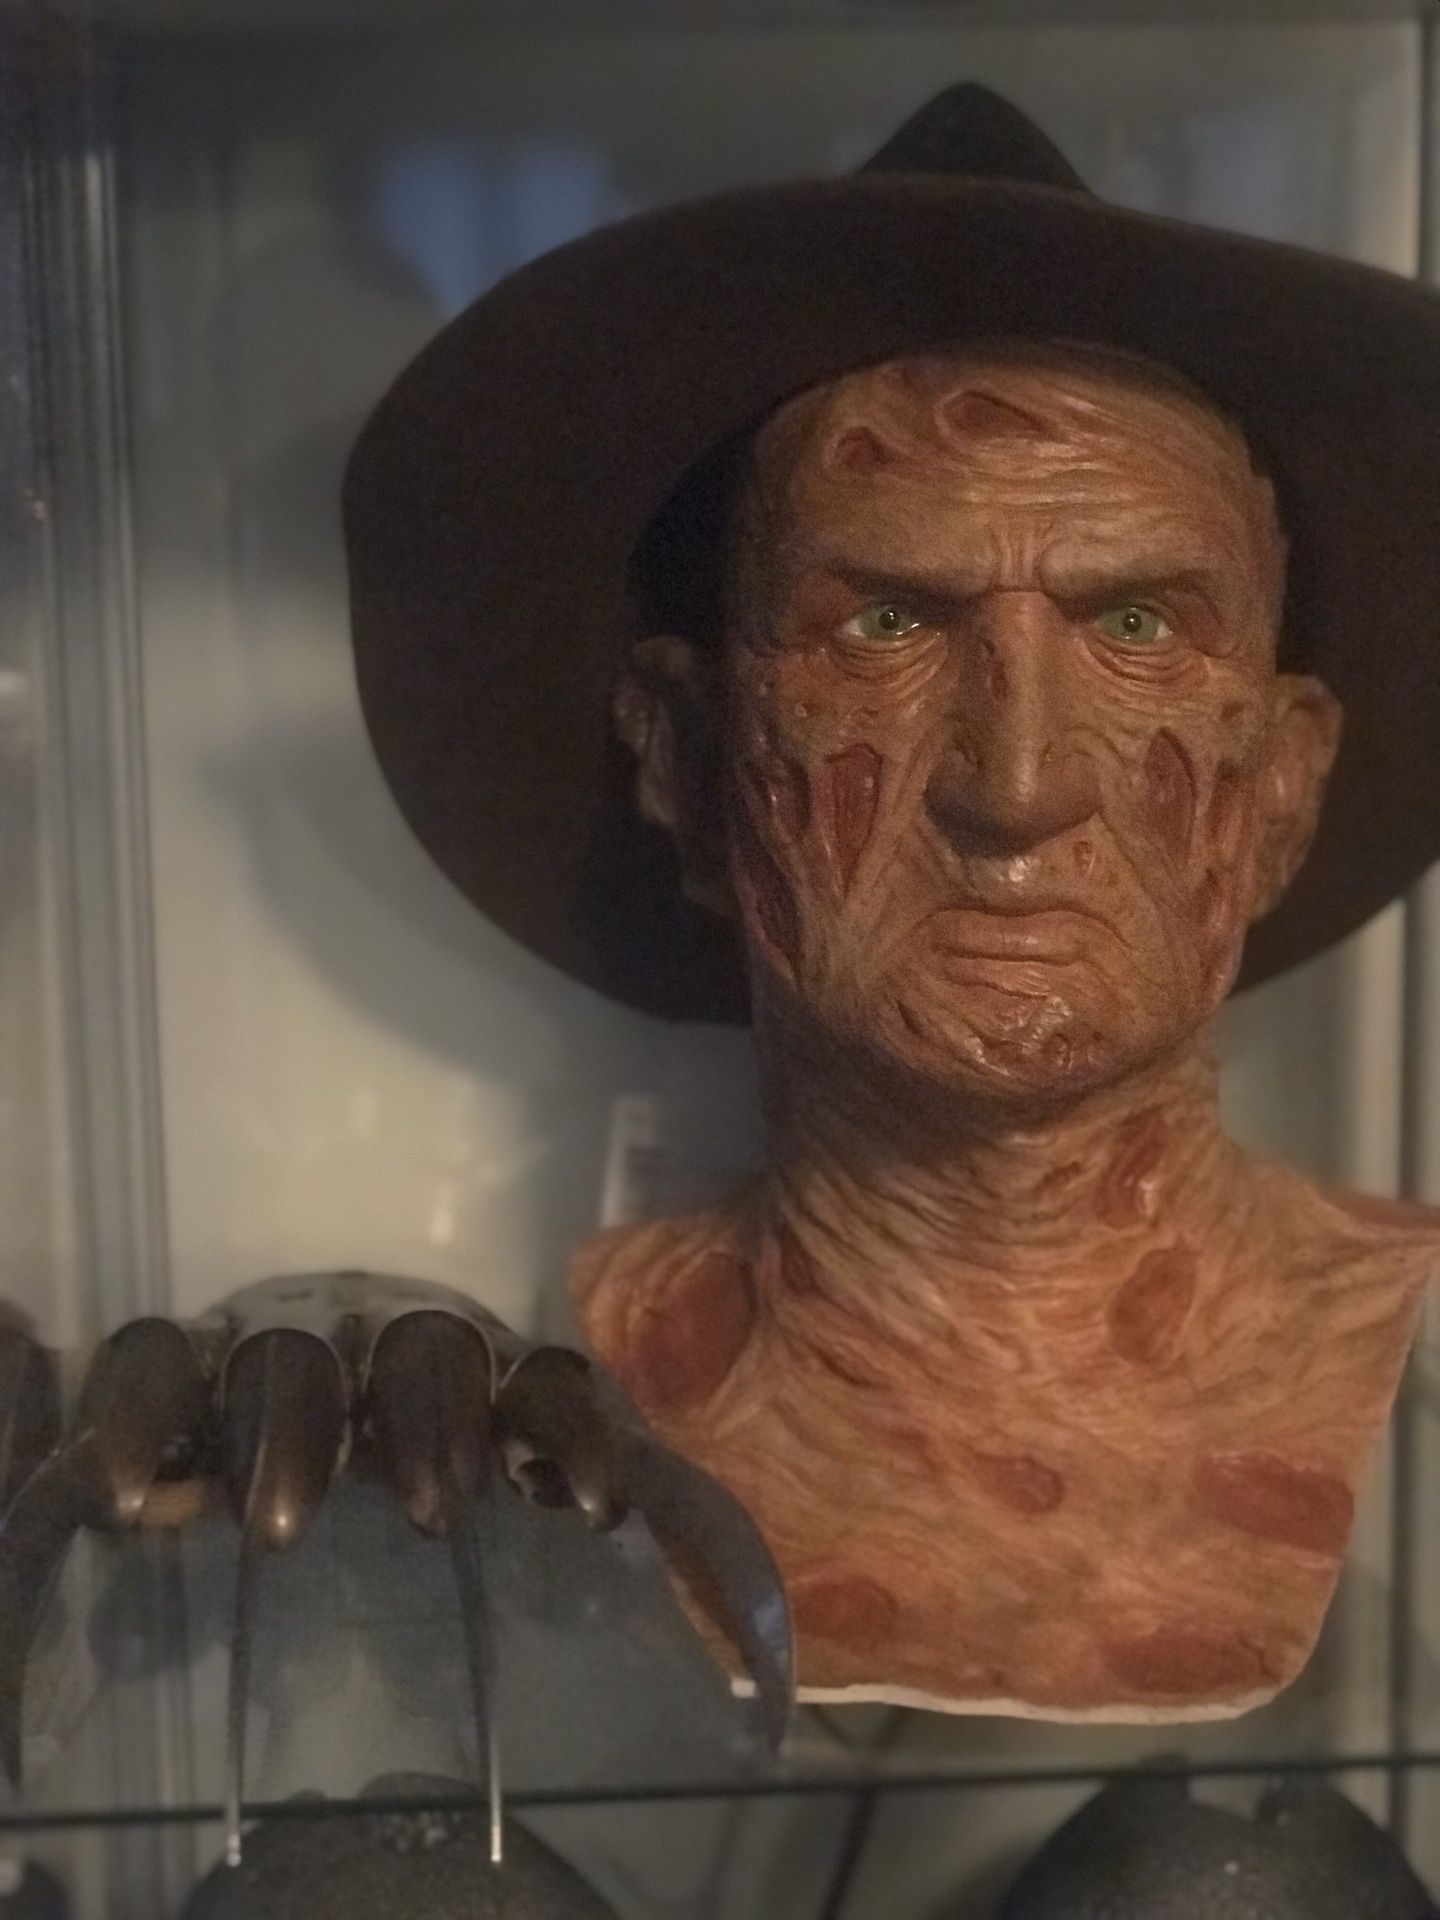 Freddy Krueger nightmare on elm street mask /bust collectors